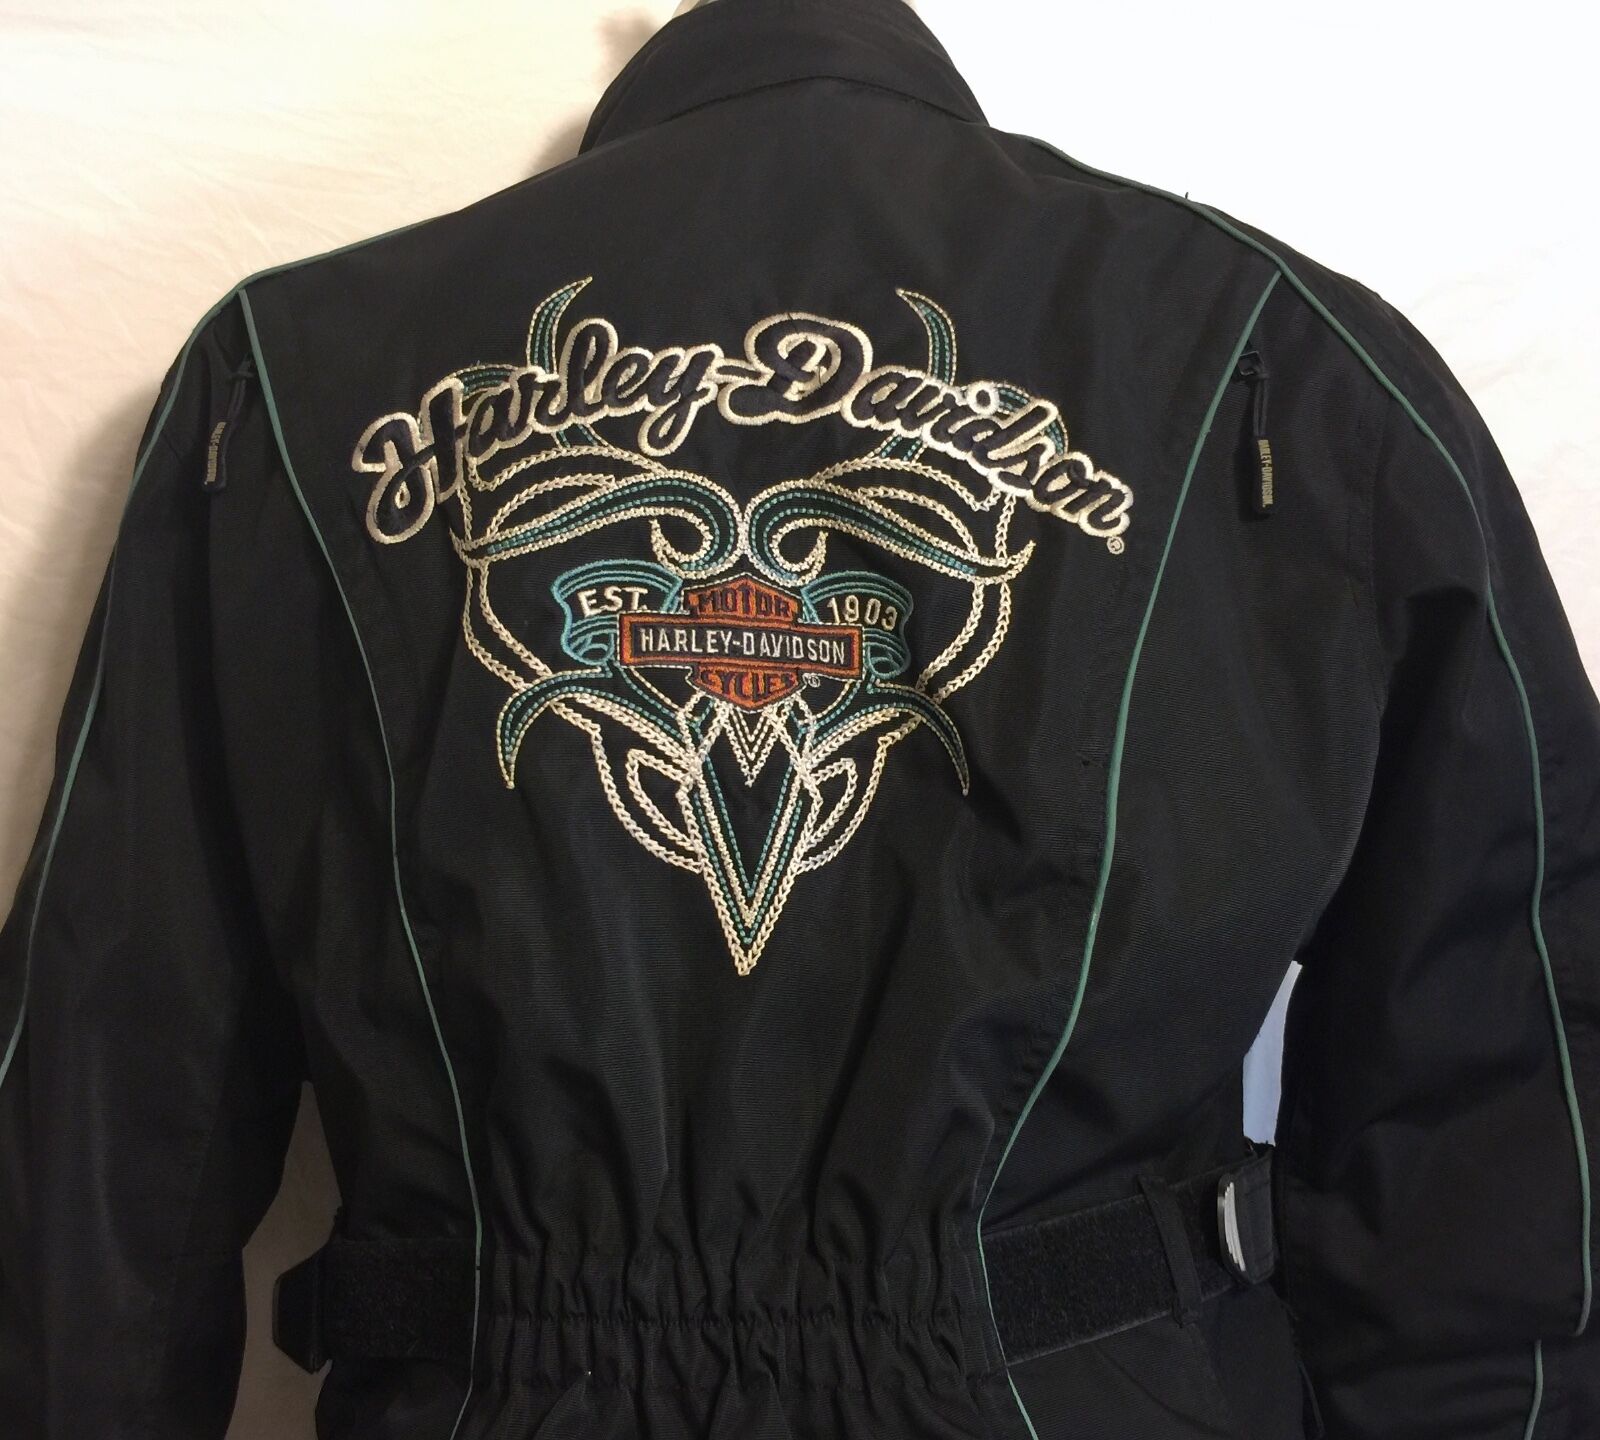 Harley Davidson Riding Jacket Sz Medium Zipper Vents Tattoo Elbow Padding Biker